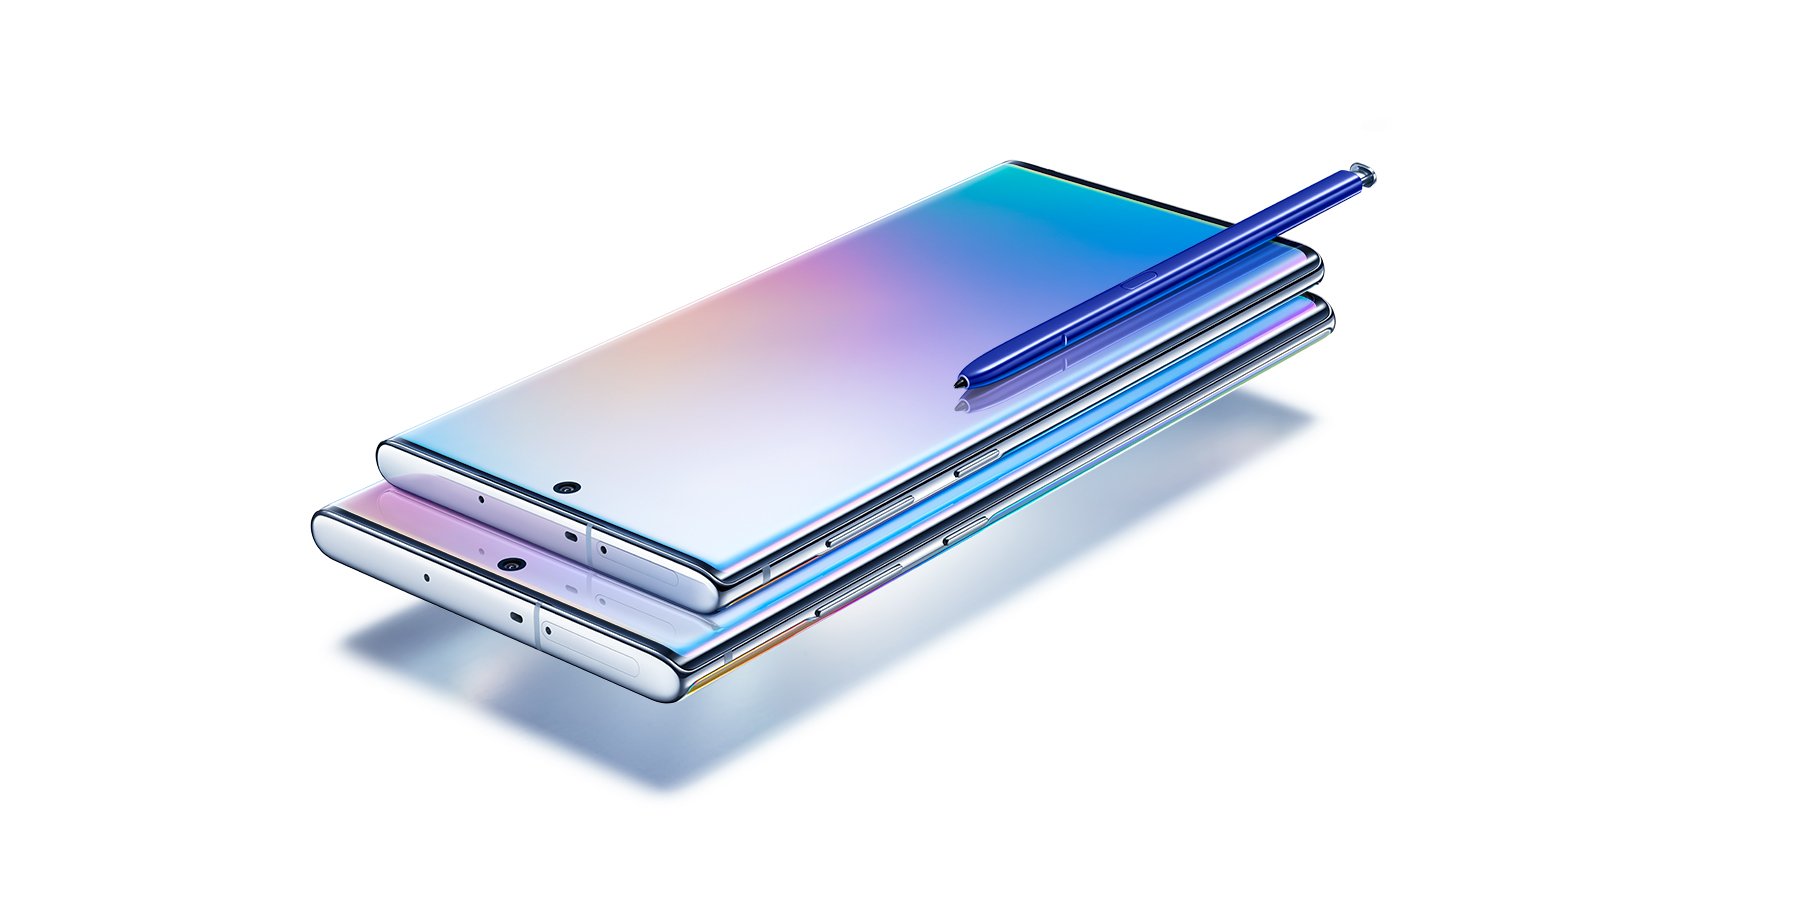 Samsung: سبب إزالة مقبس الصوت من Galaxy Note 10